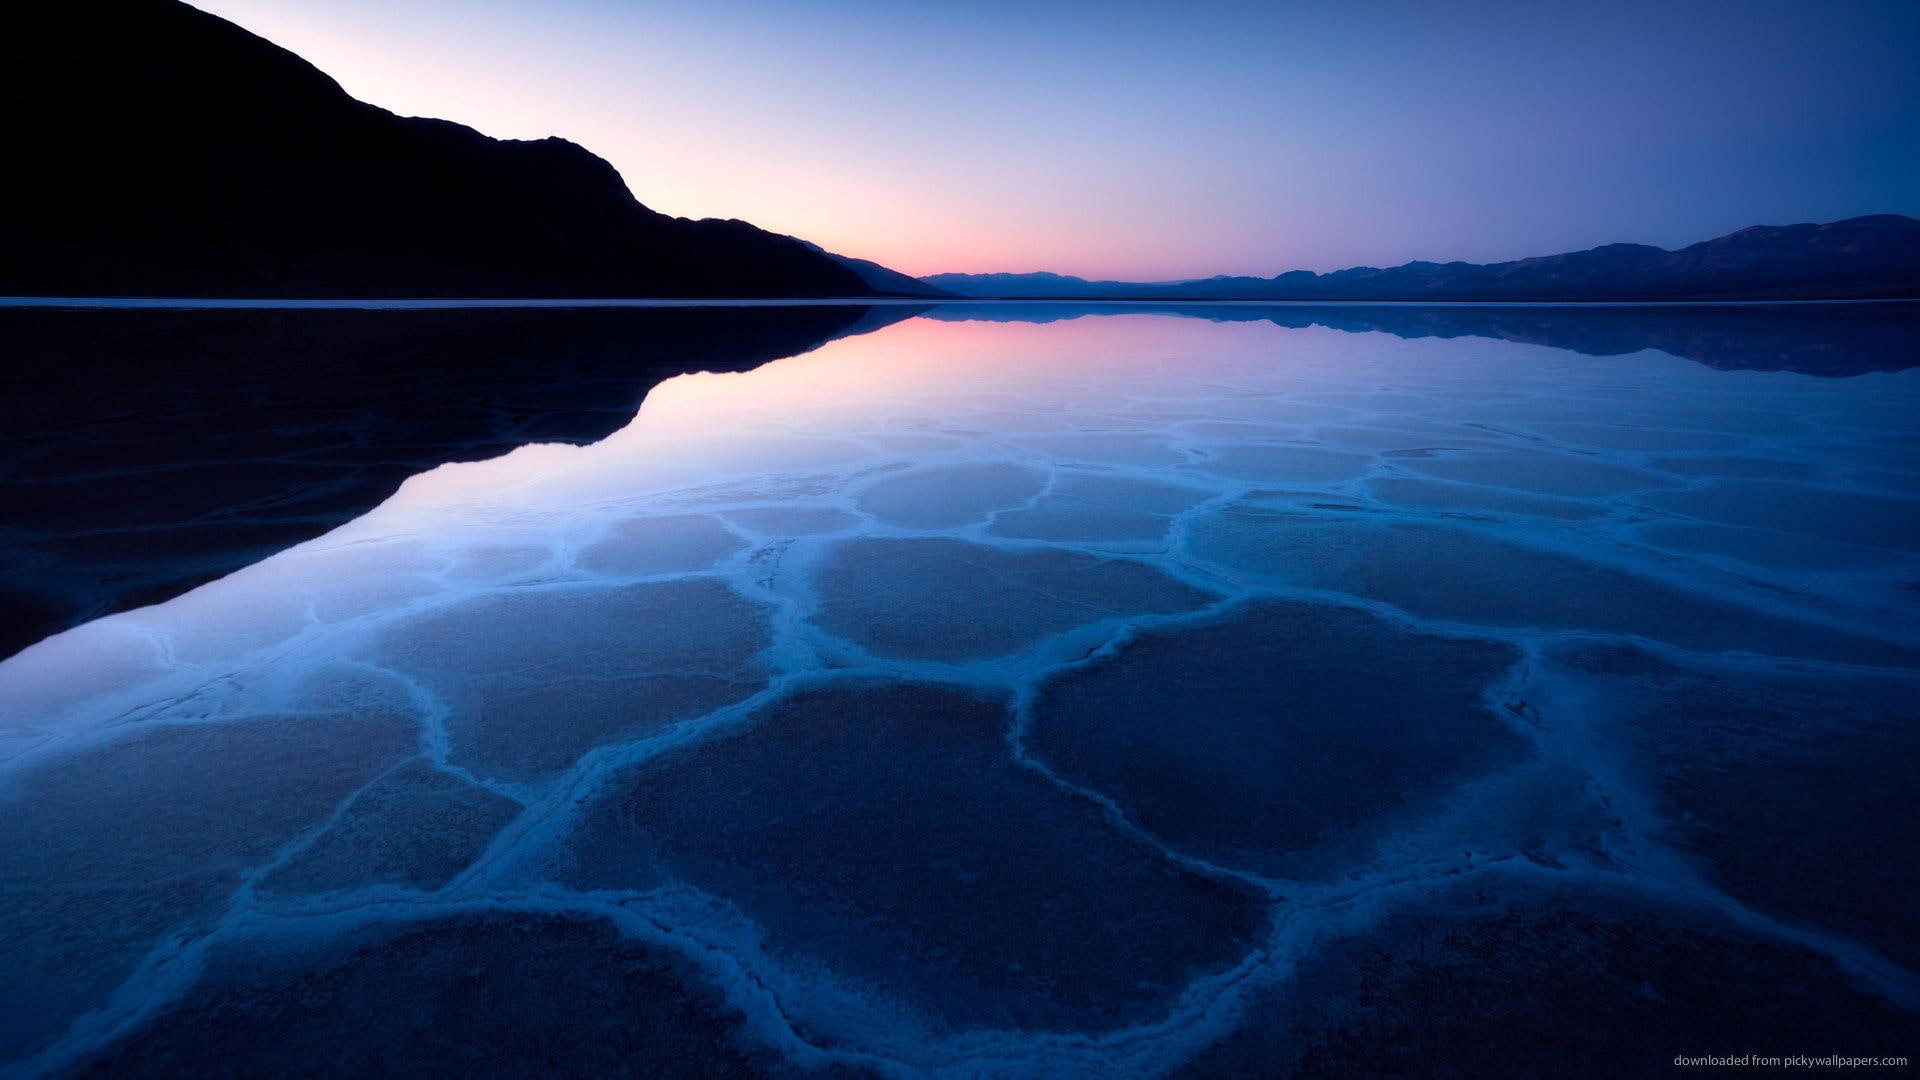 Badwater Basin In Death Valley At Sunrise, mountain, lake, silouhette